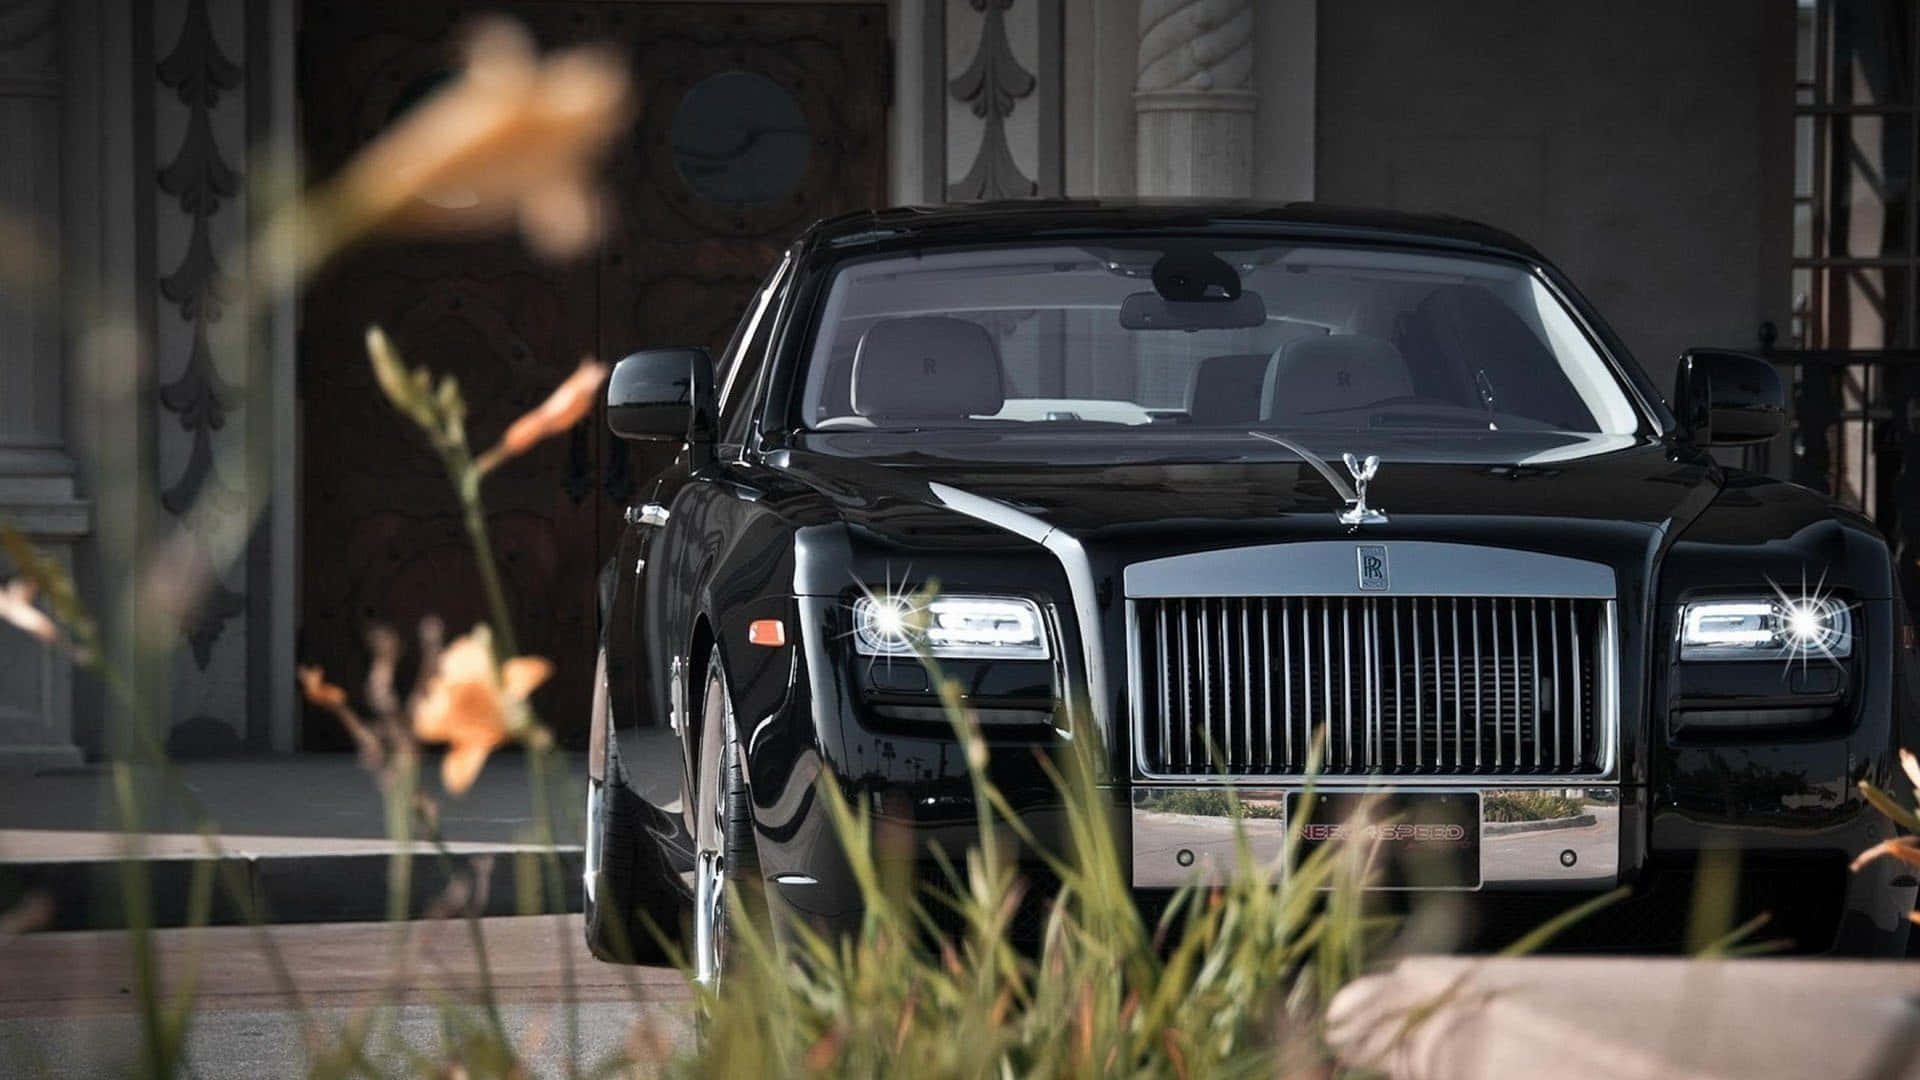 Luxury Rolls Royce Car on the Road